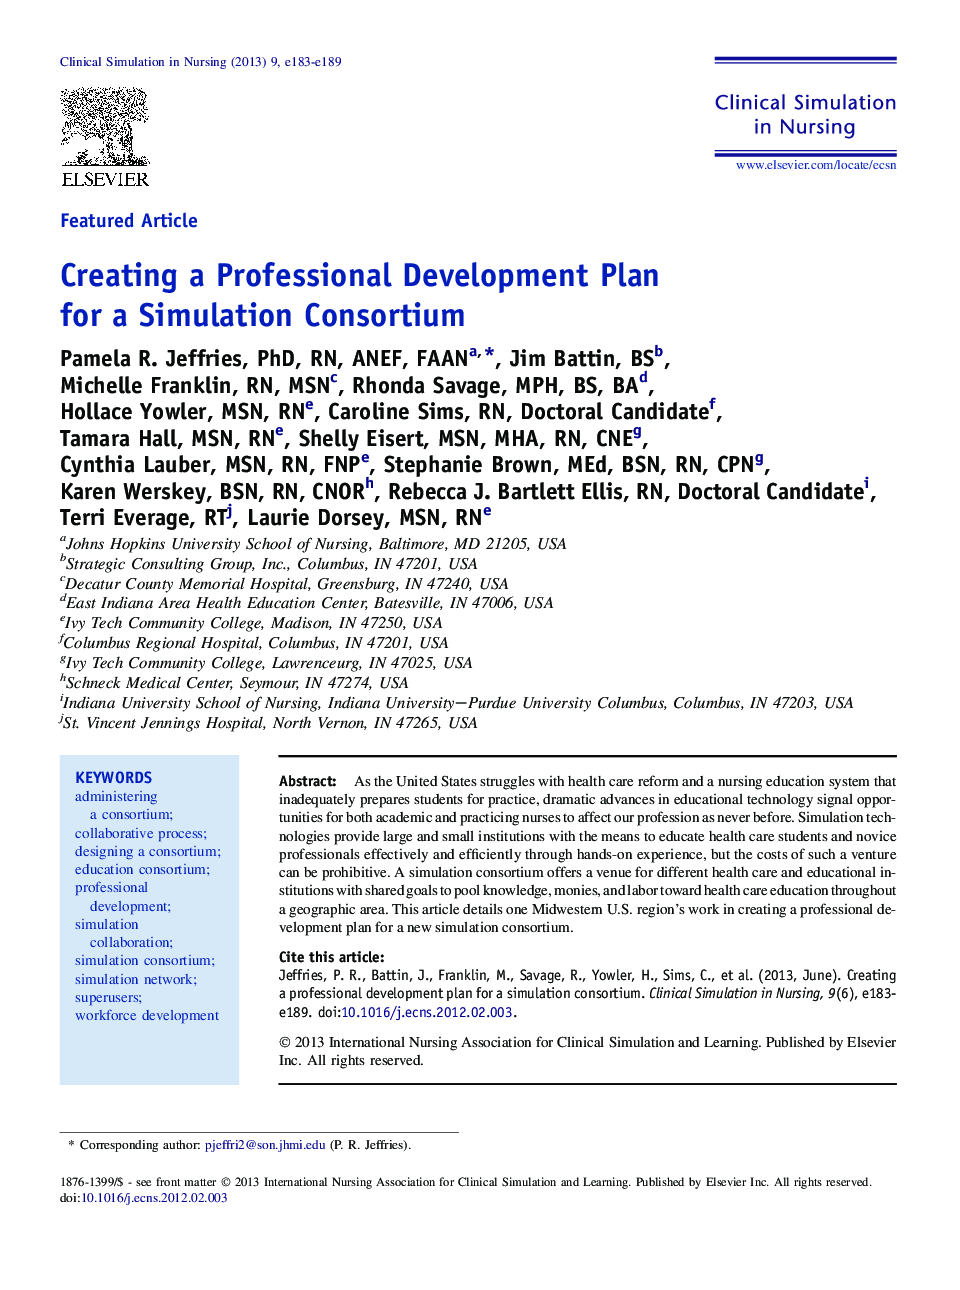 Creating a Professional Development Plan for a Simulation Consortium